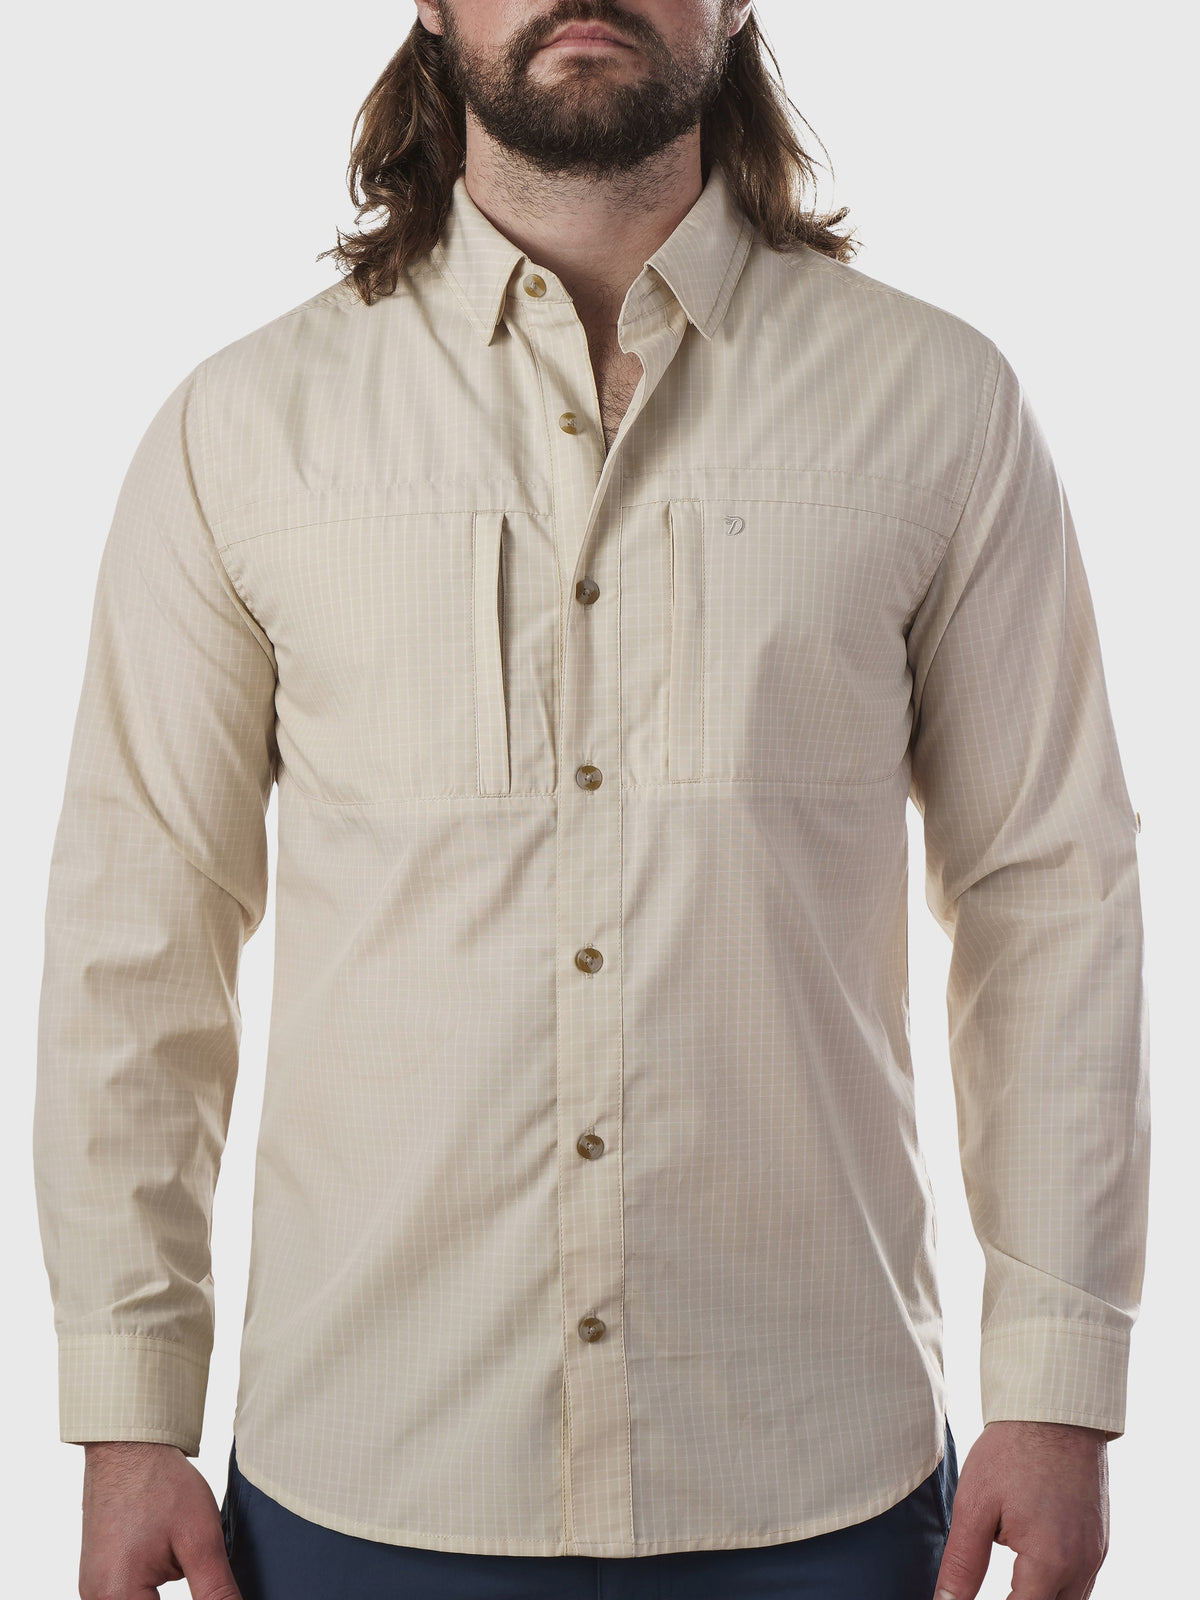 Helm Shirt Long Sleeve - Sanddollar Grid